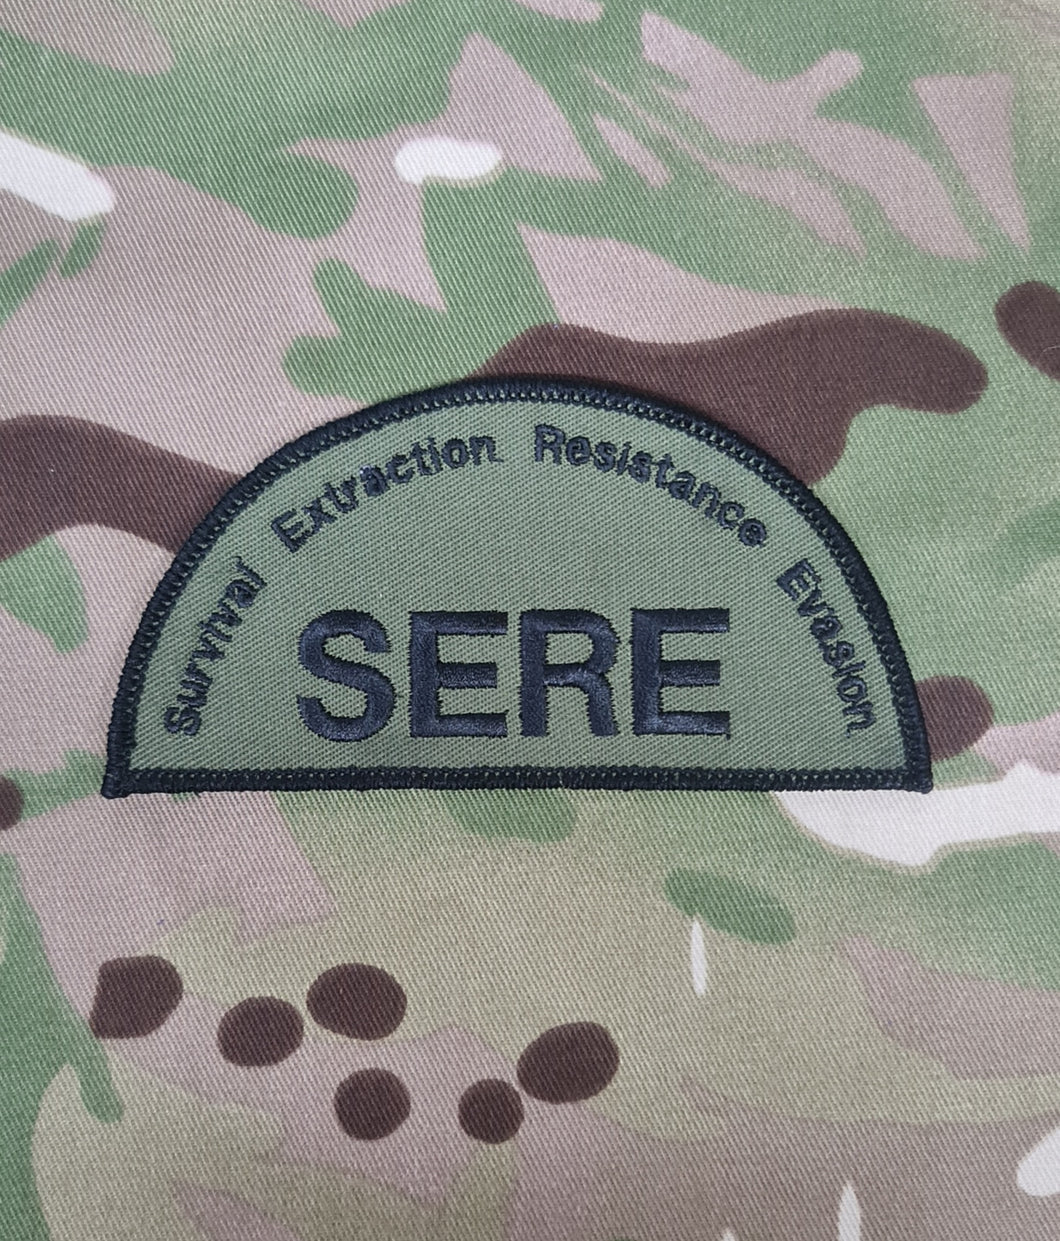 SERE (Survival, Evasion, Resistance and Escape) TRF Badge